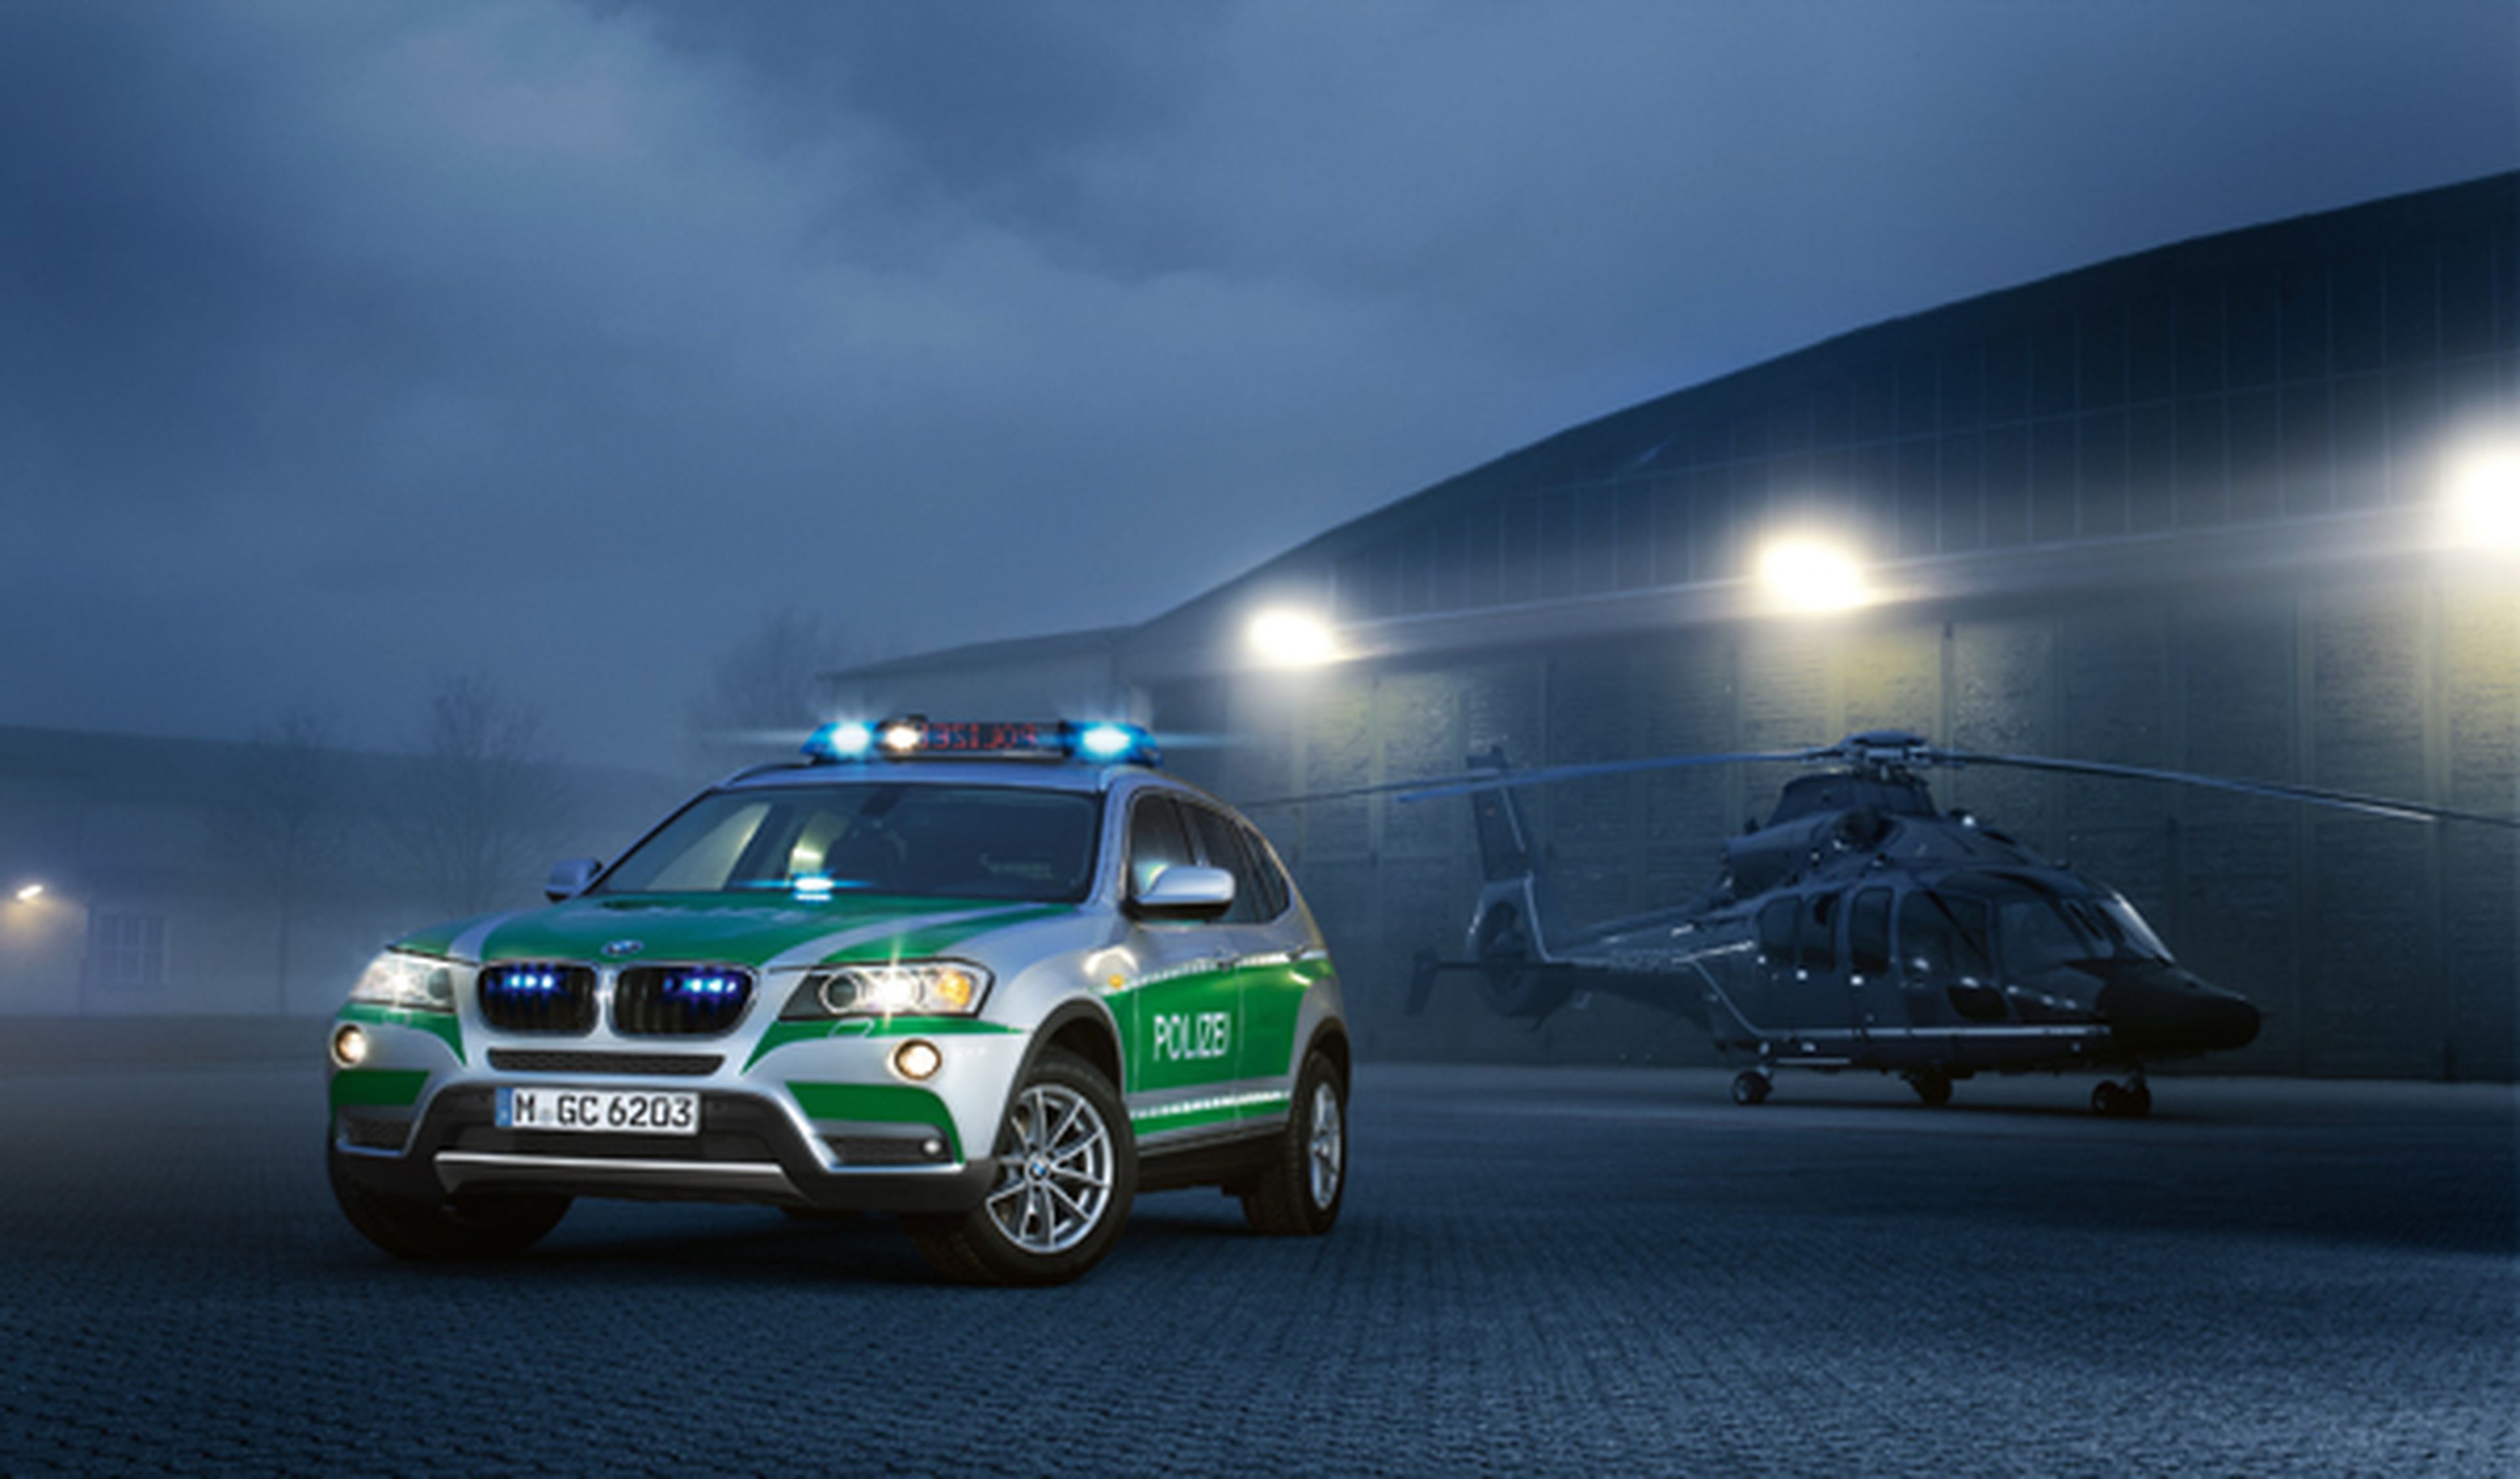 BMW policía alemana